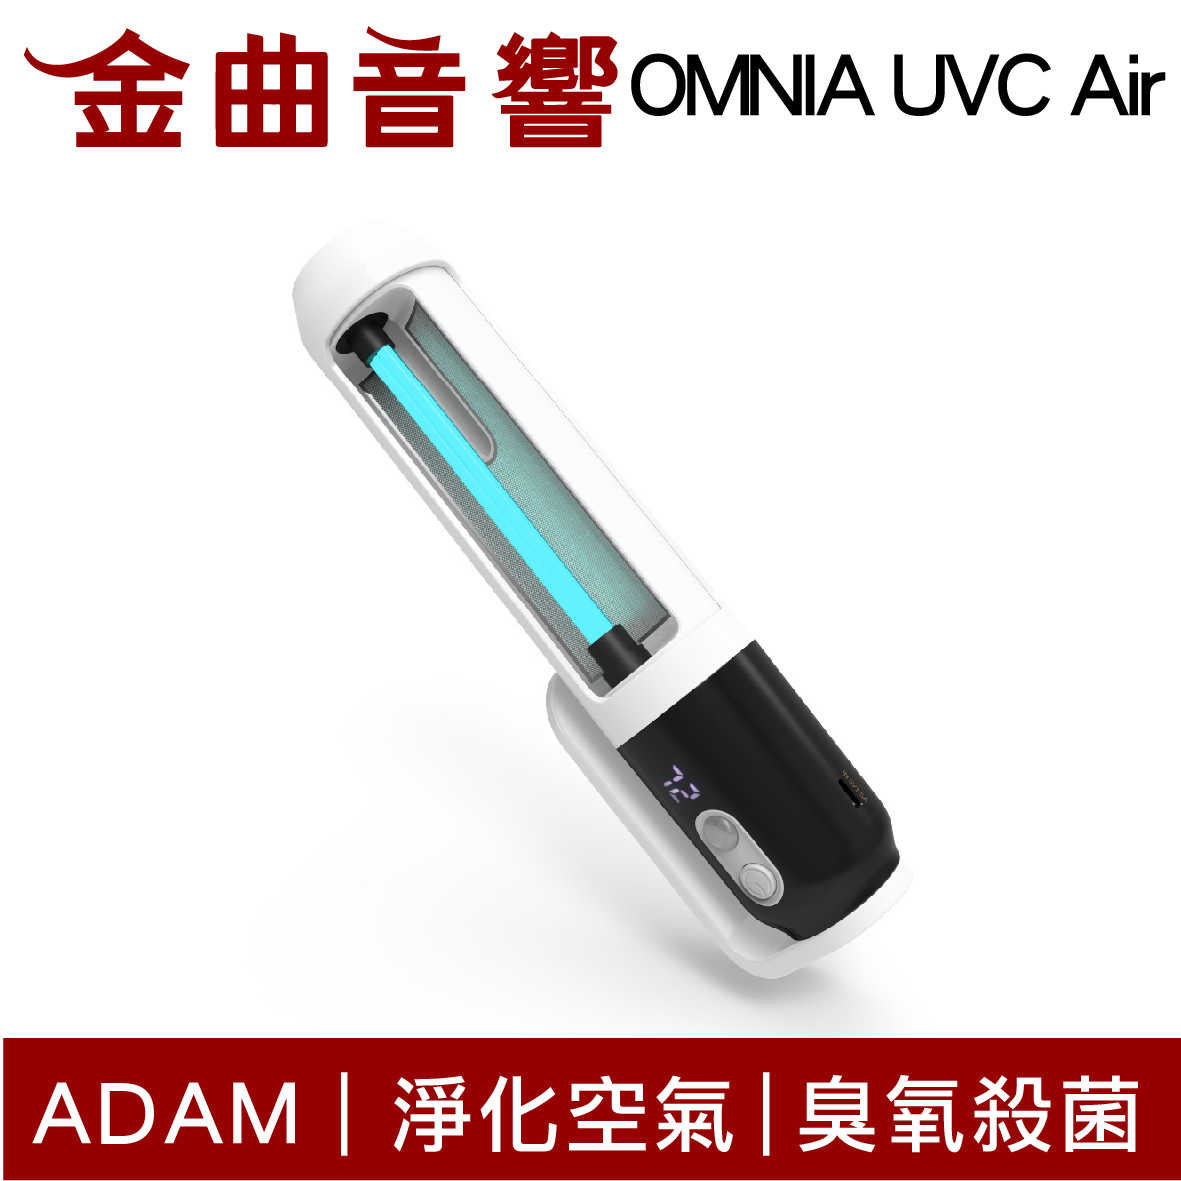 ADAM OMNIA UVC Air 手持式 臭氧 紫外線 殺菌燈 | 金曲音響